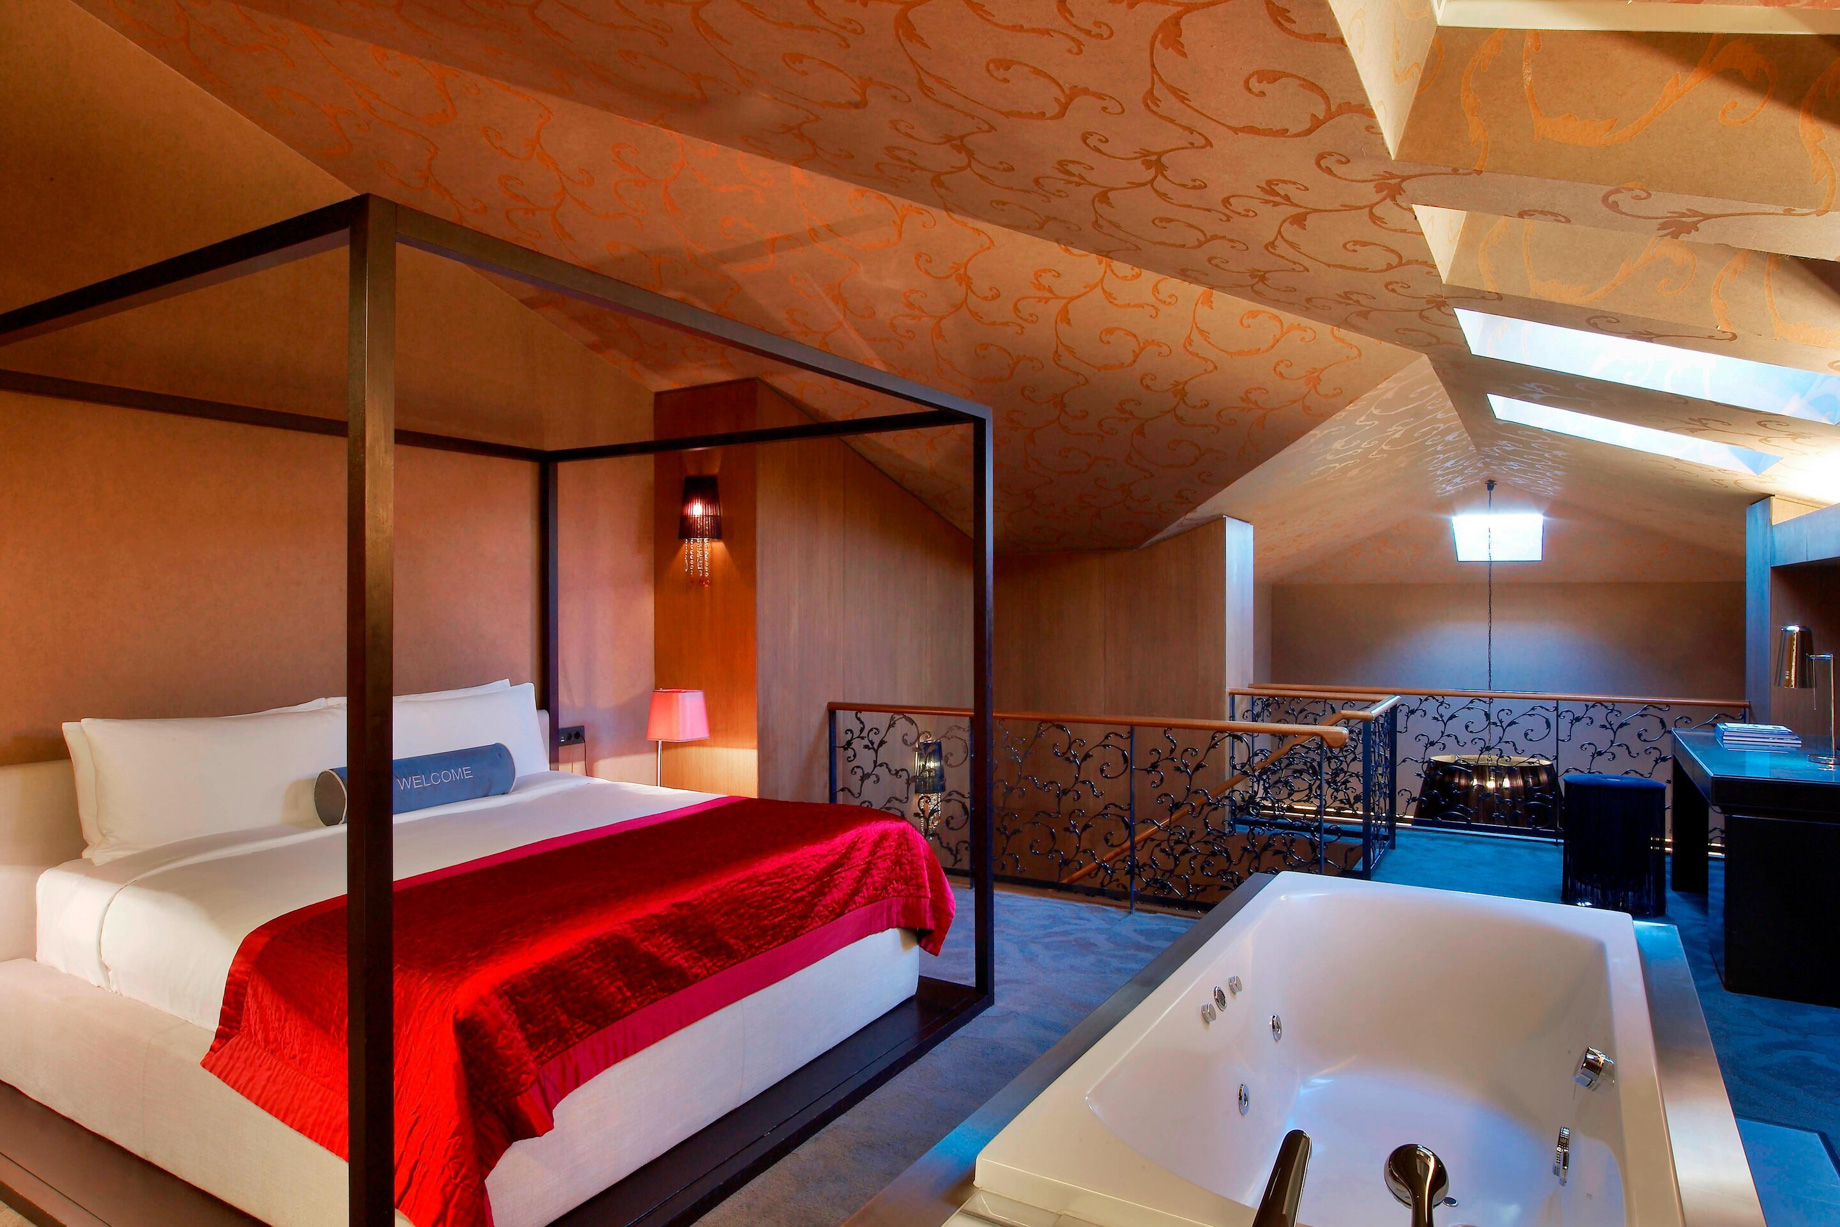 W Istanbul Hotel - Istanbul, Turkey - Wow Suite Bedroom Decor